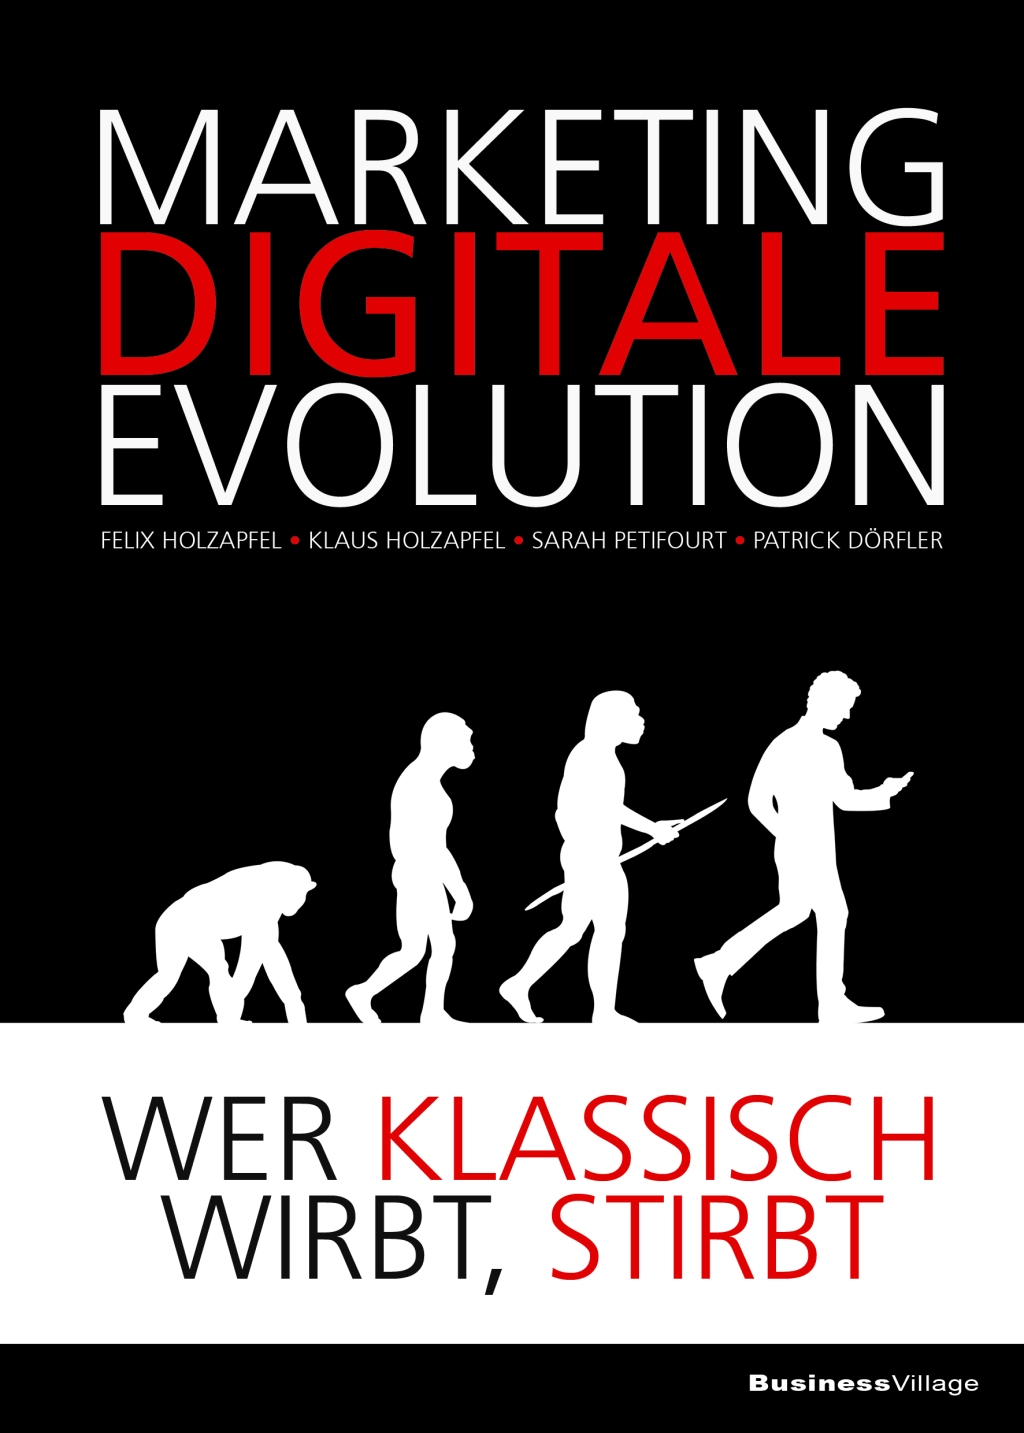 Digitale Marketing-Evolution